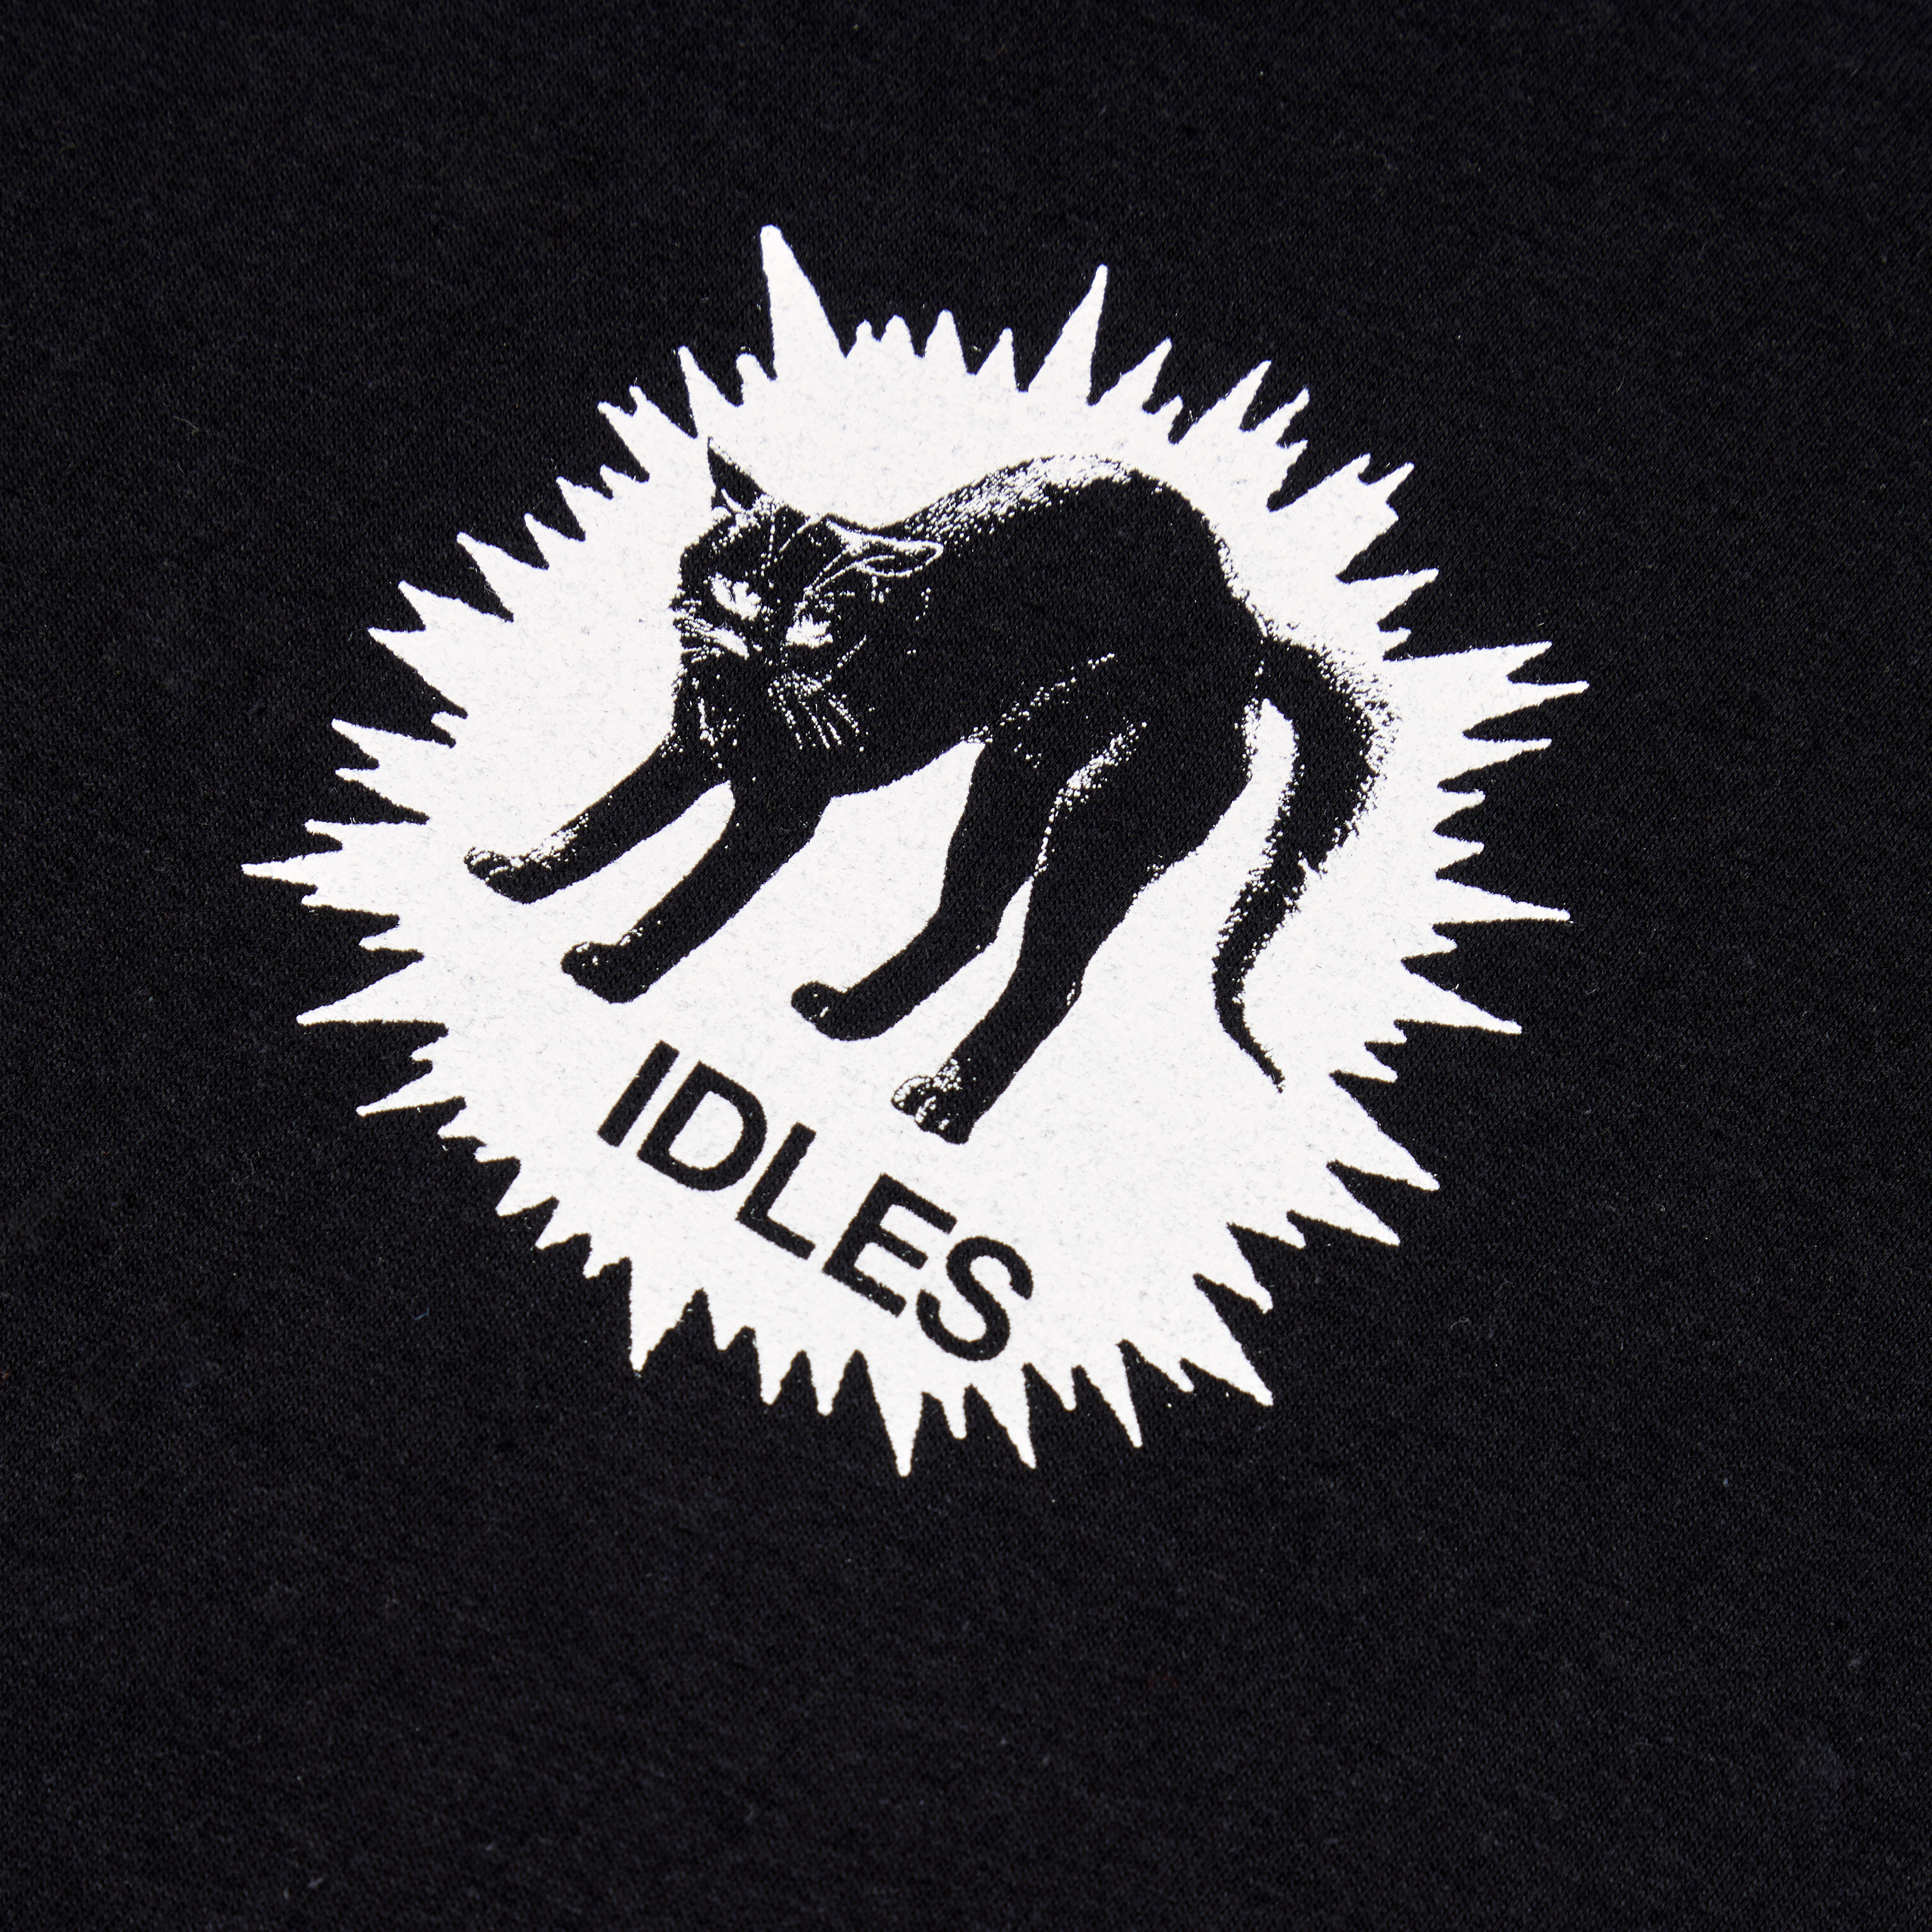 IDLES - No King Cat T-Shirt